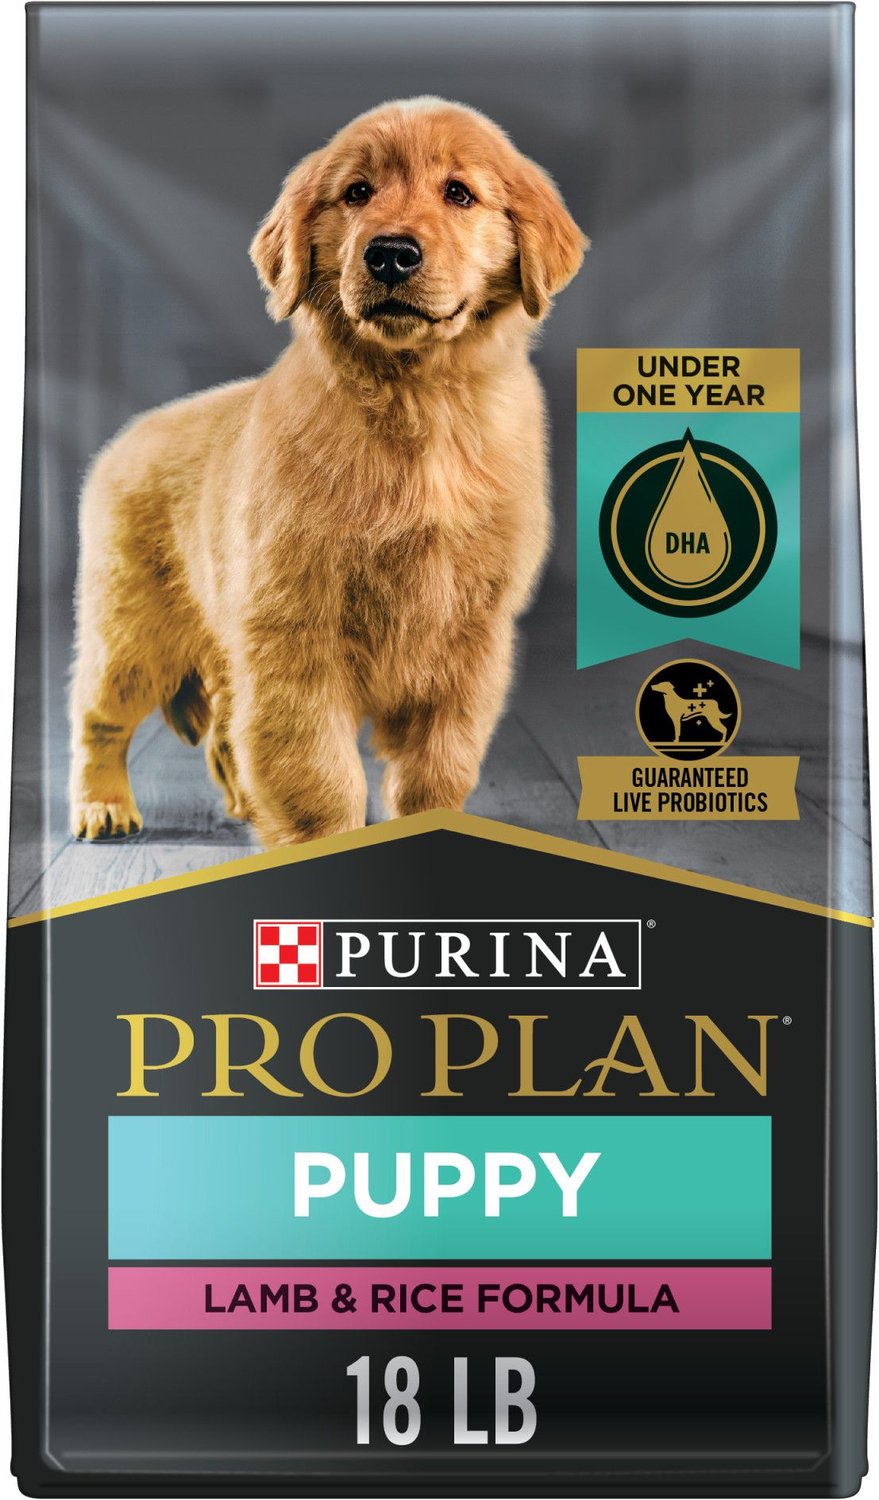 PURINA PRO PLAN Puppy Lamb & Rice Formula Dry Dog Food, 18lb bag